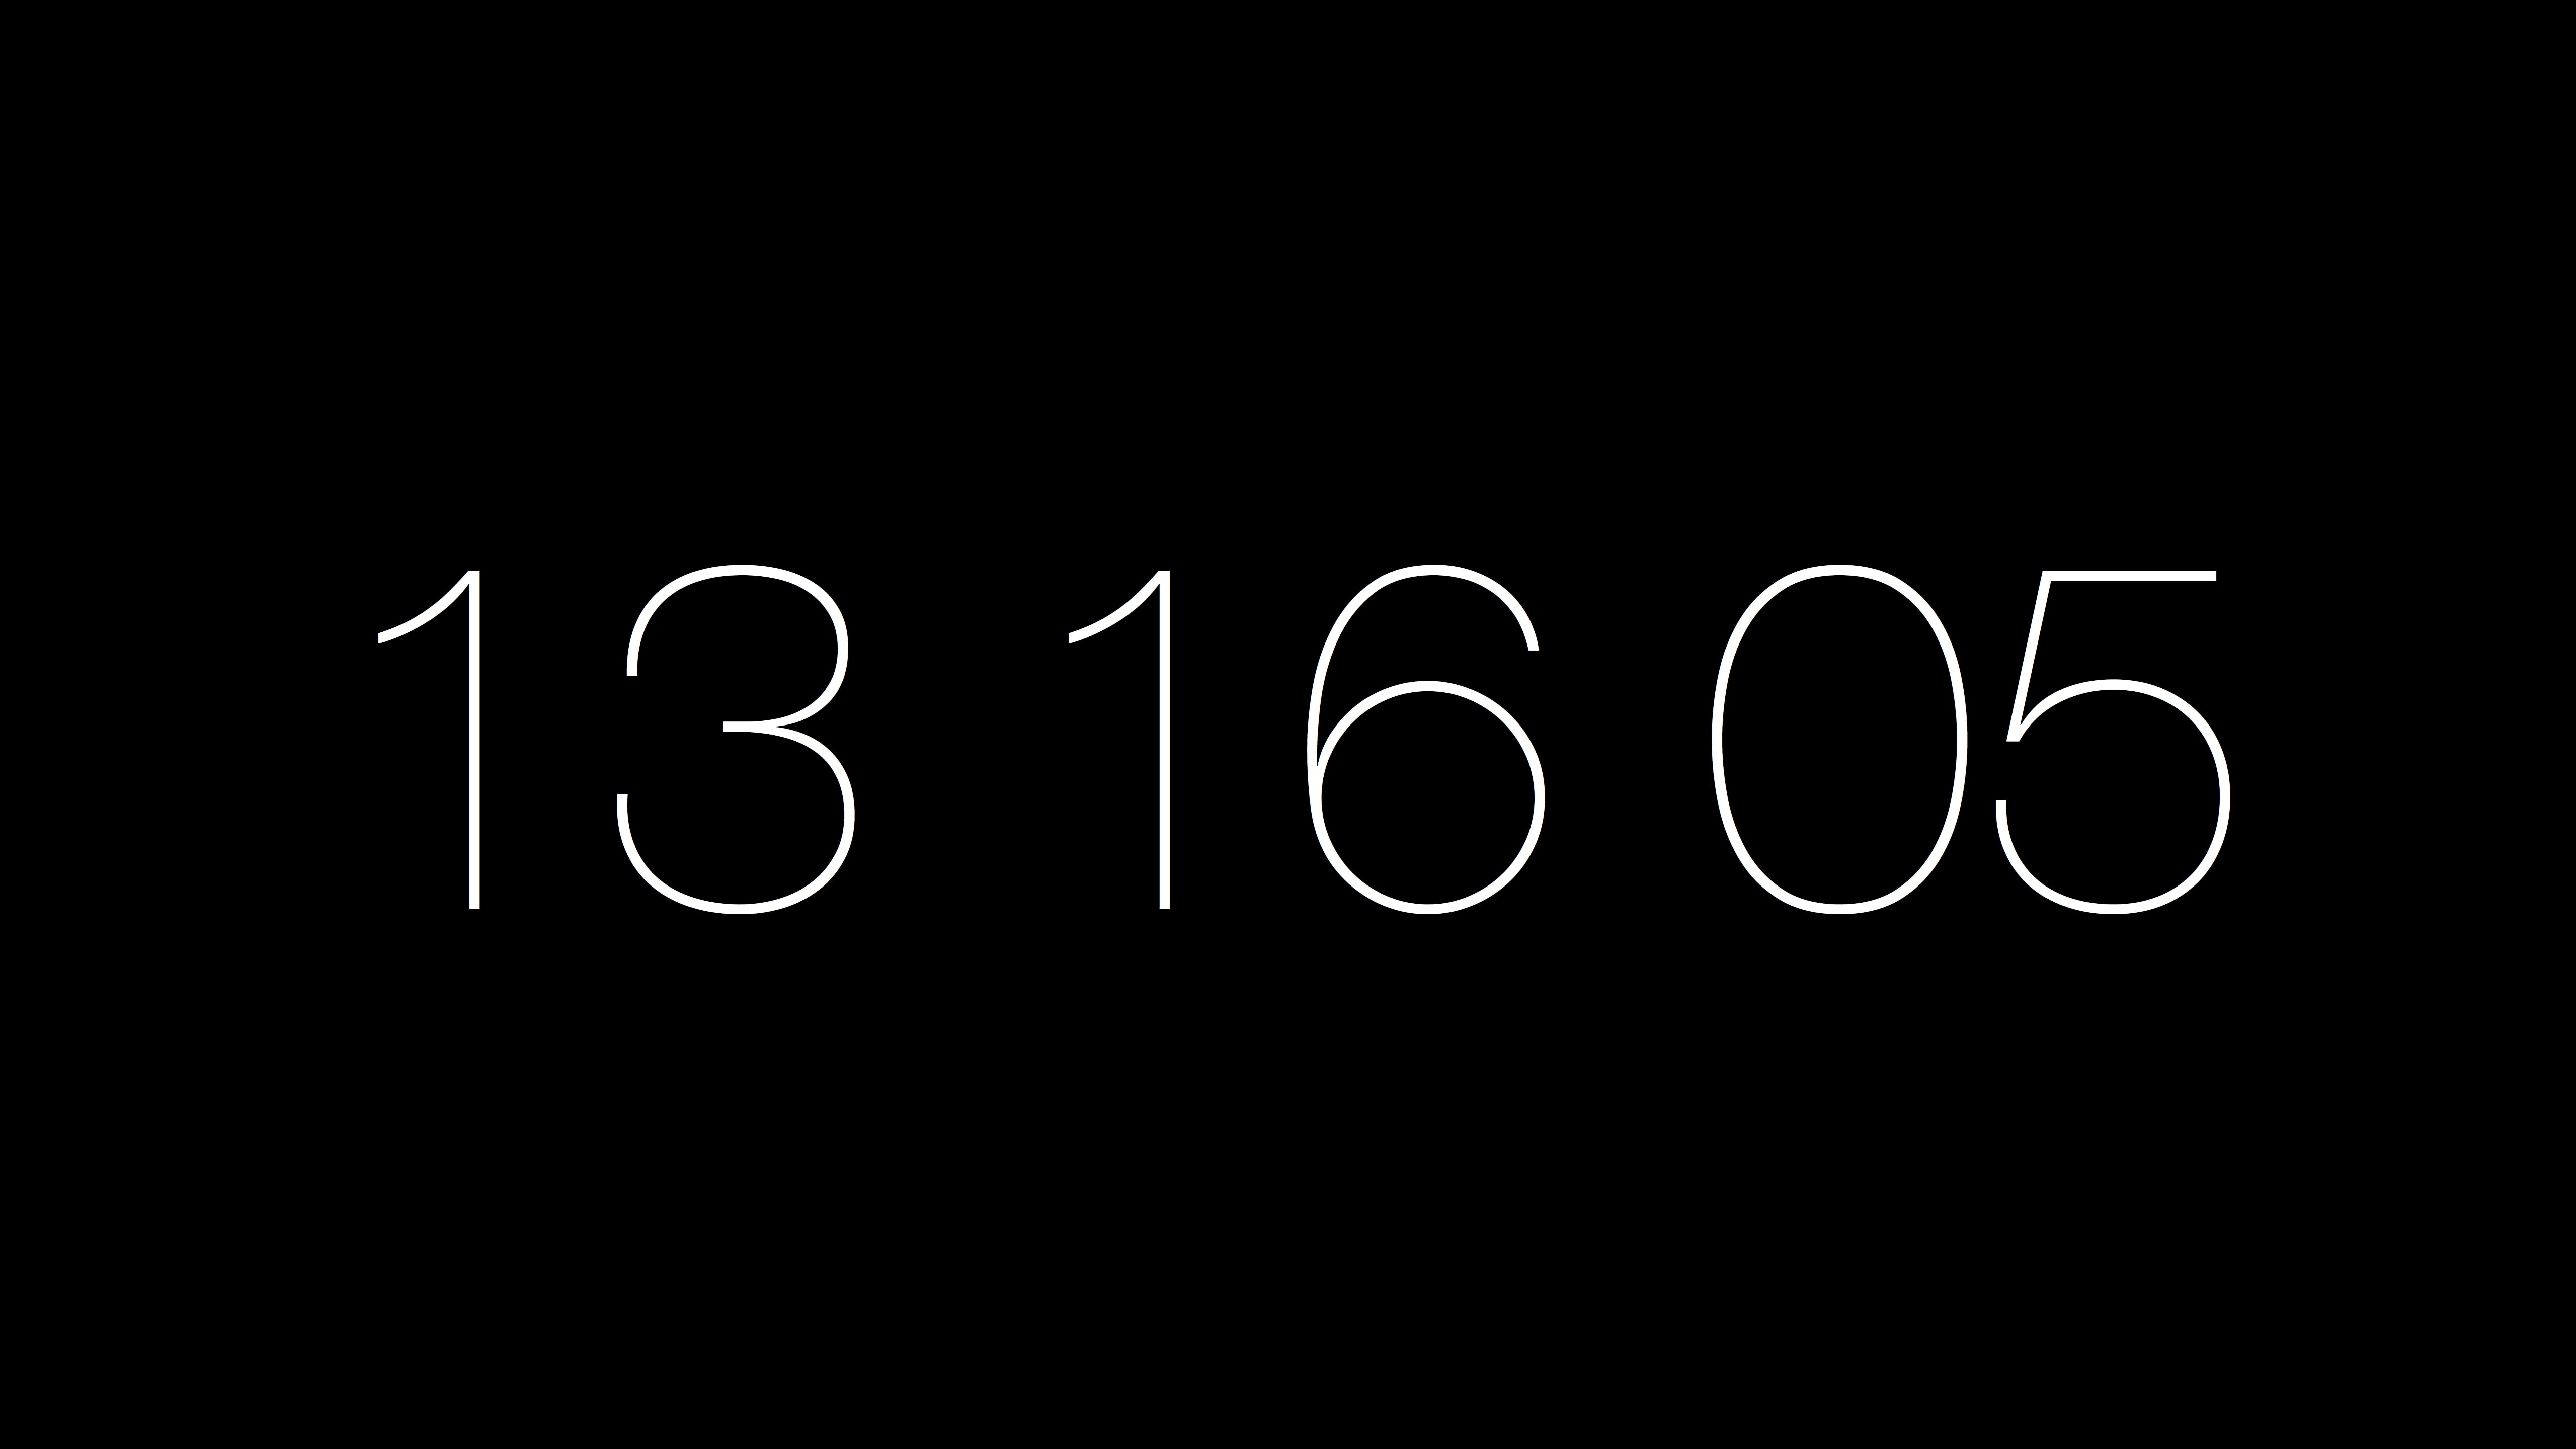 Mac app to set screensaver to count days 2016